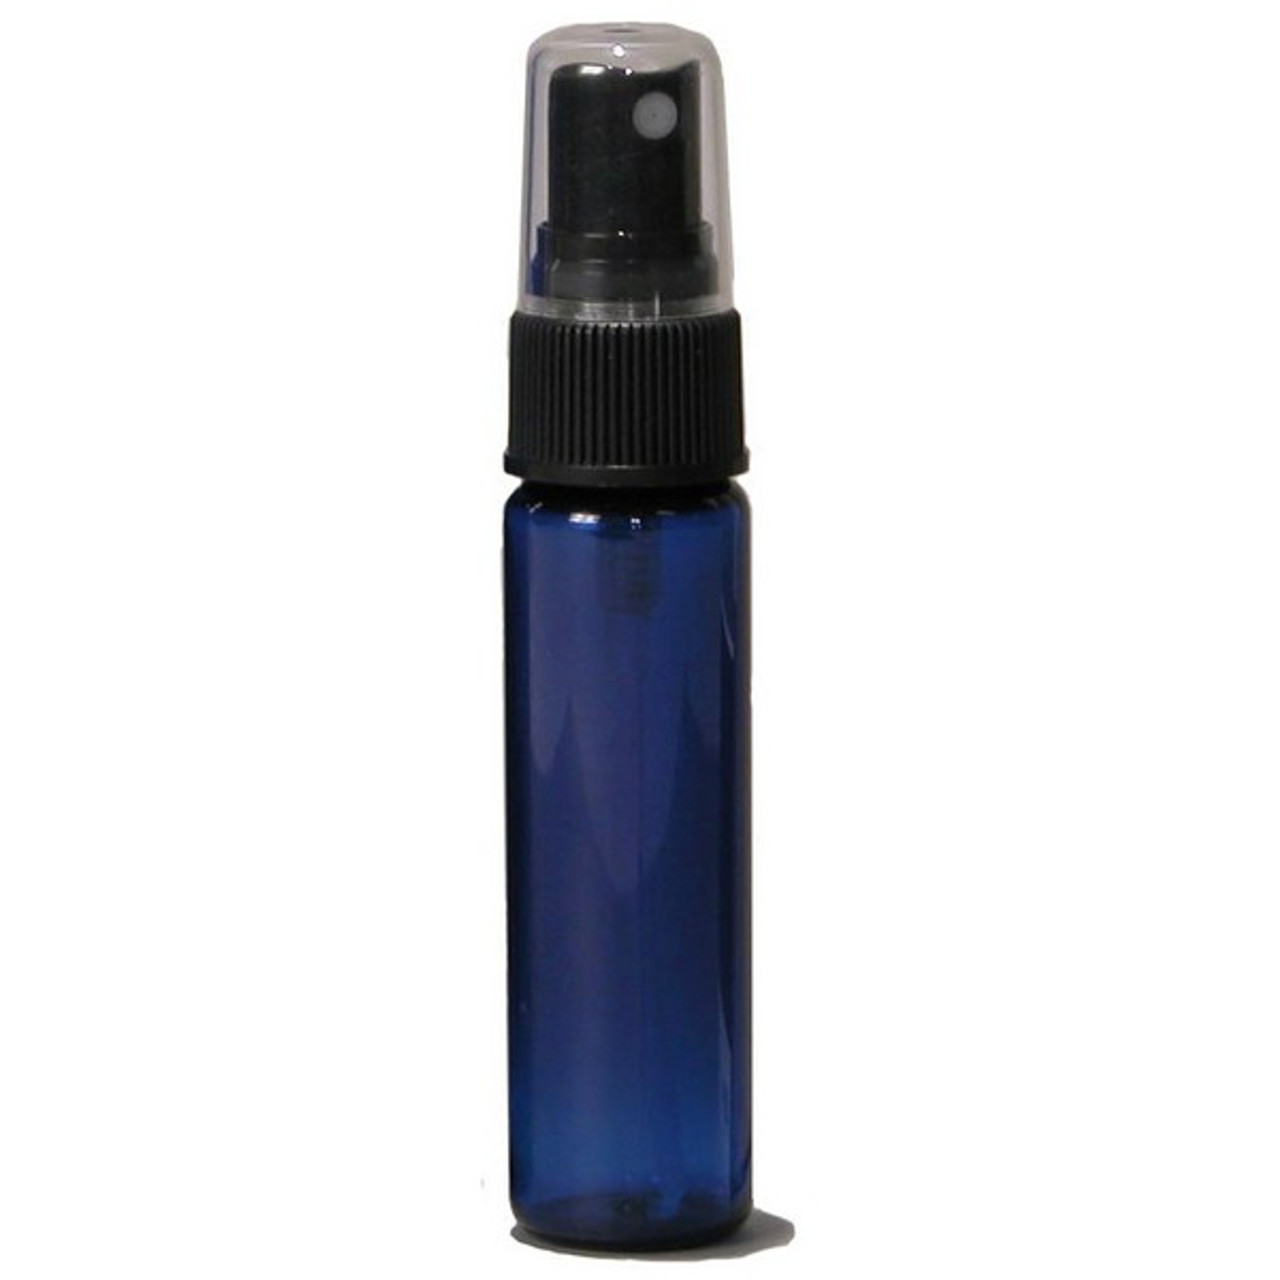 Chemical Resistant Spray Bottle, Fine Mist, 4oz.